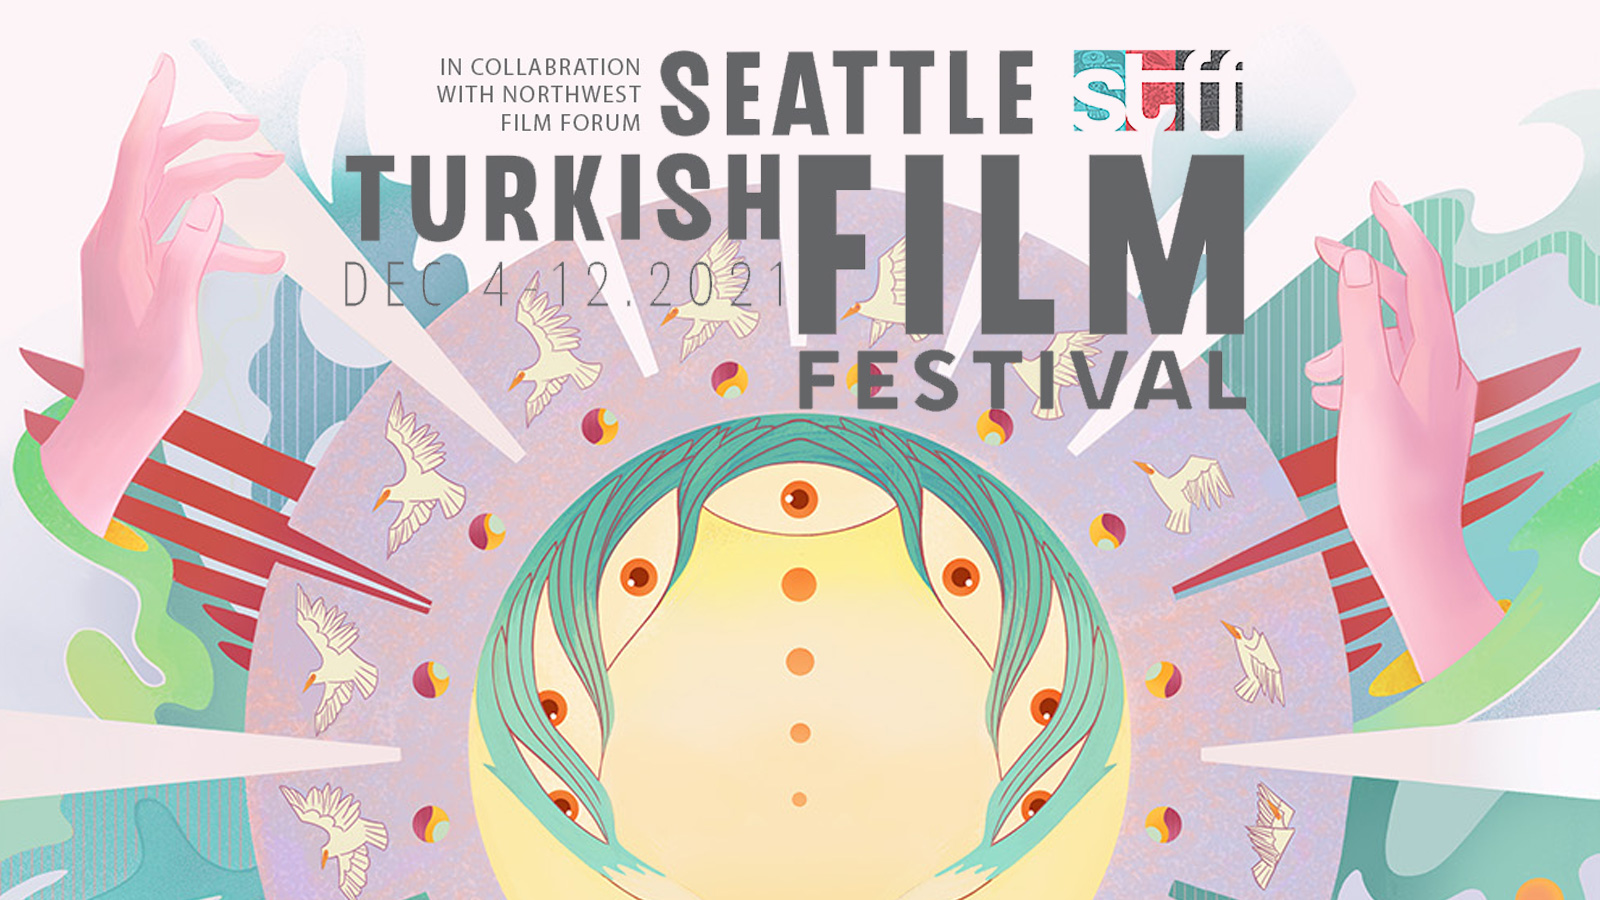 Seattle Turkish Film Festival 2021 [Hybrid] Northwest Film Forum